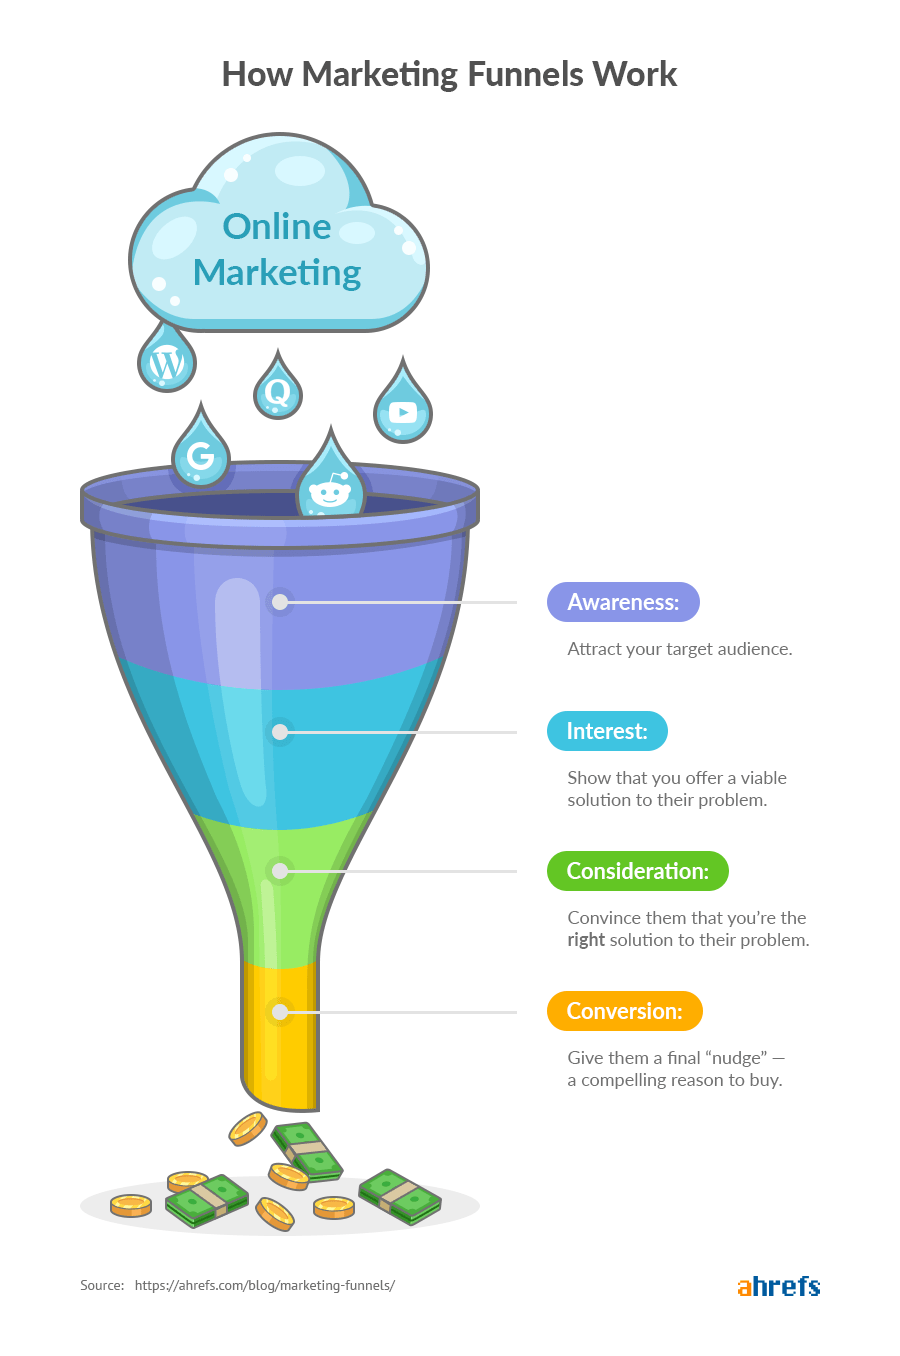 marketing funnels